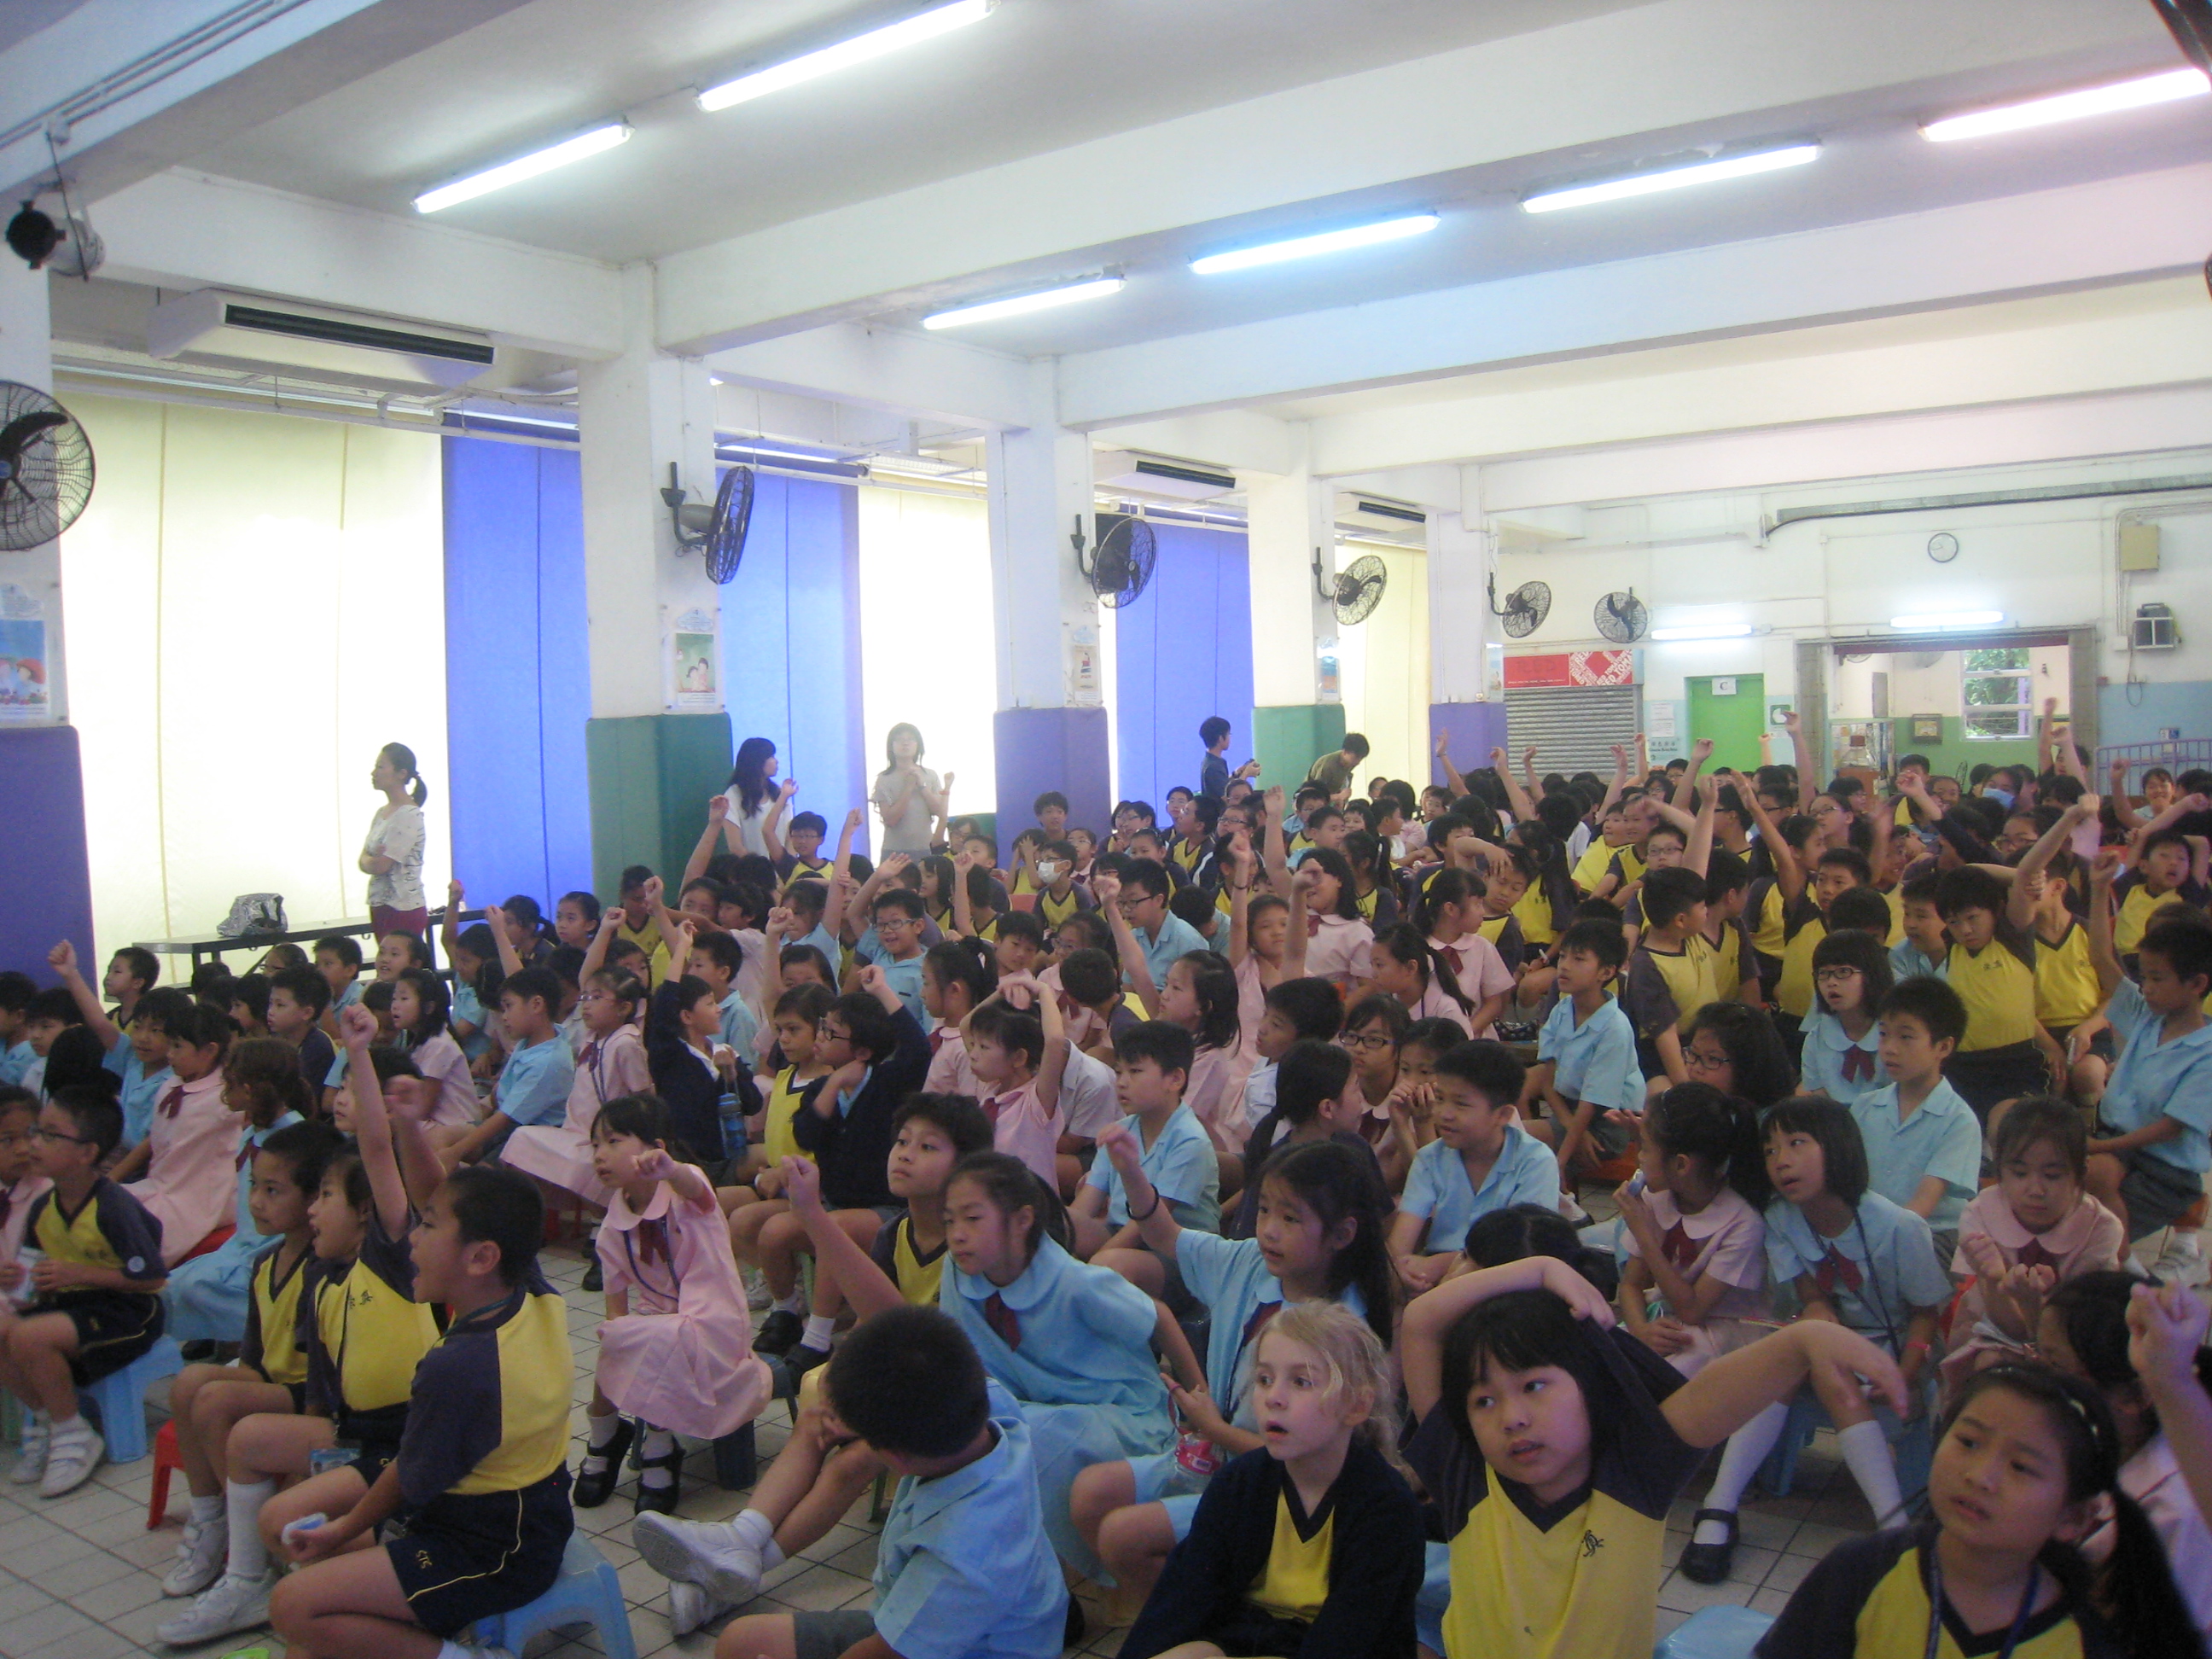 Sai Kung Sung Tsun Catholic School (Primary Section)